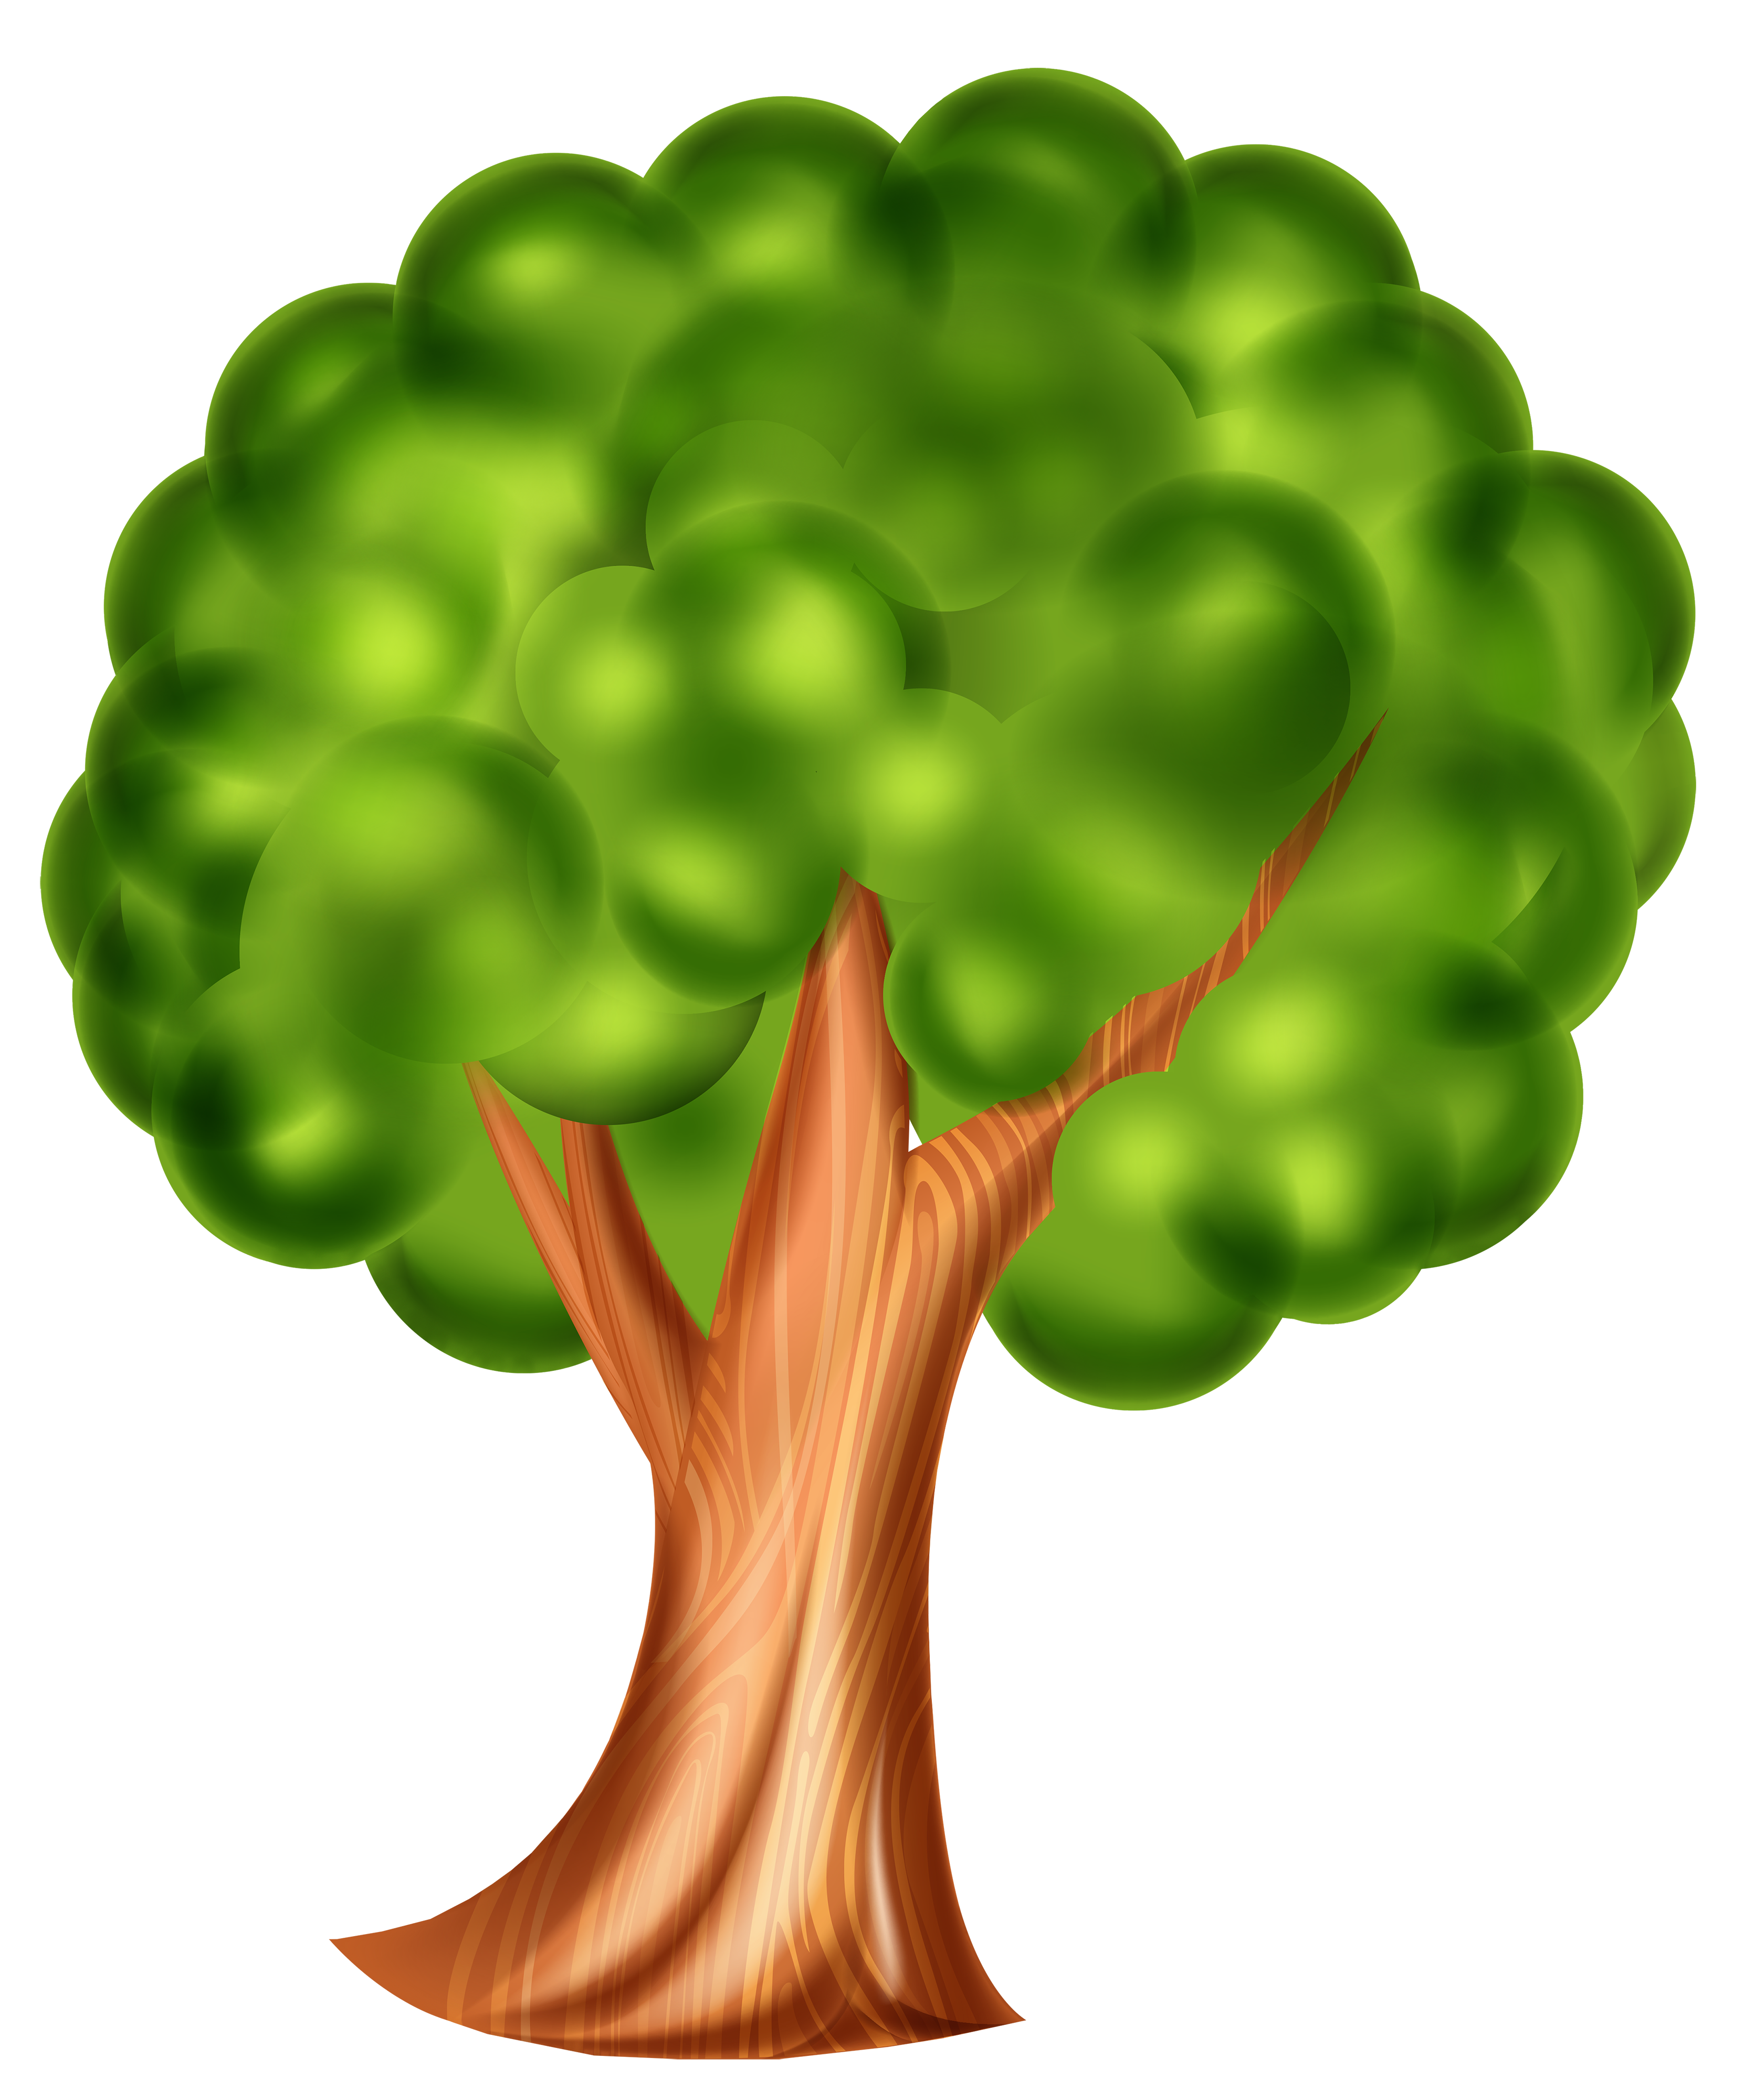 pistachio tree clipart - Clipground